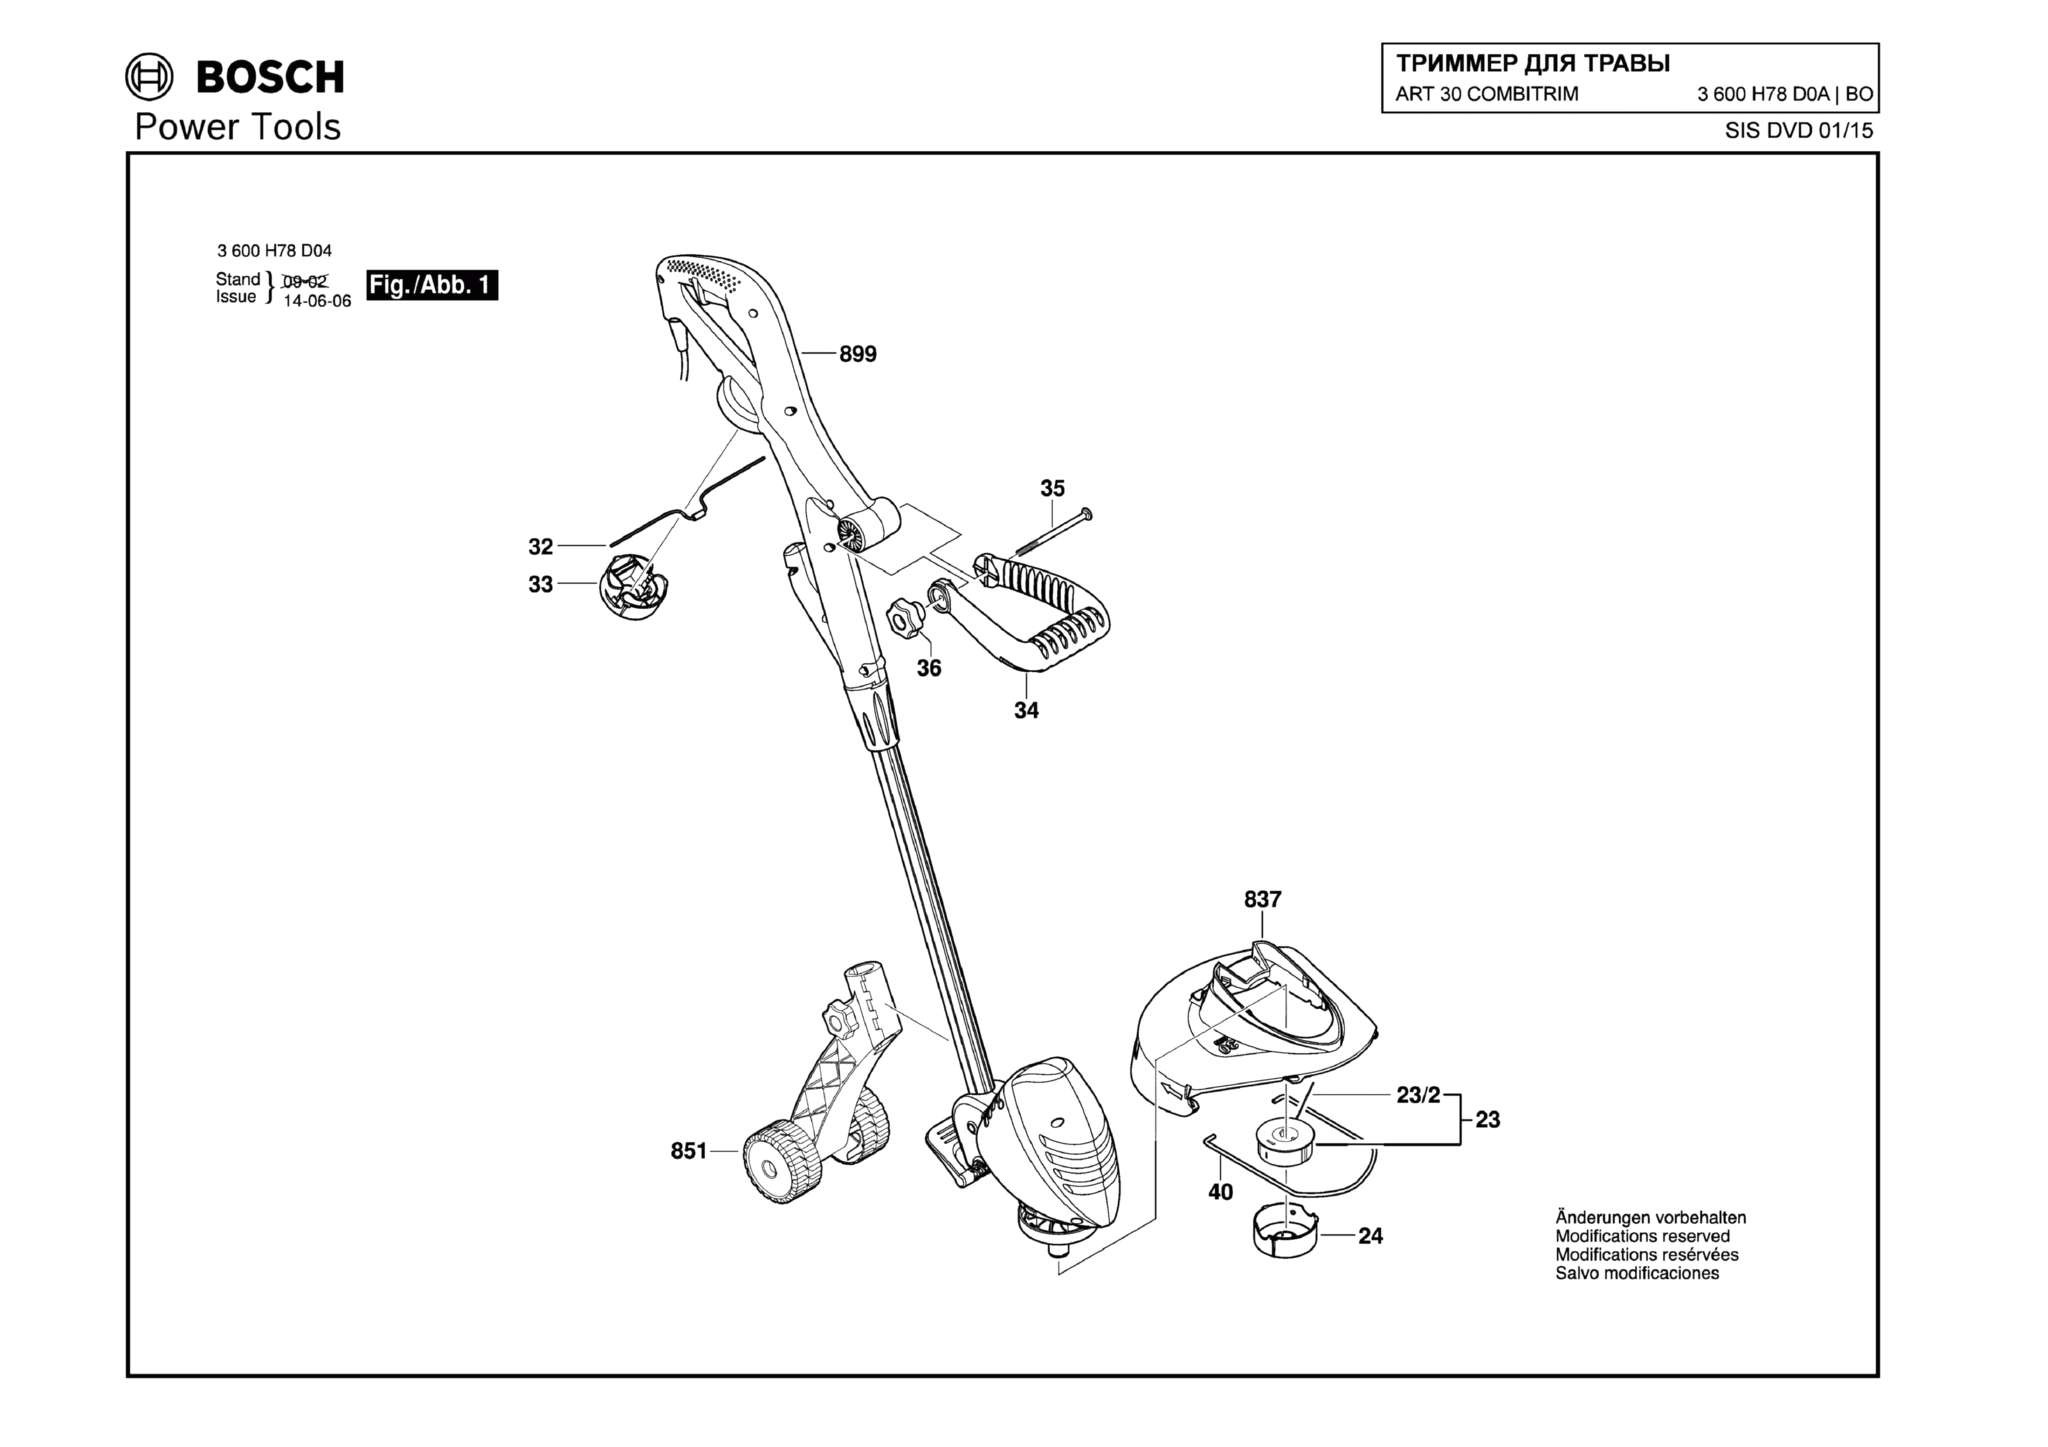 Запчасти, схема и деталировка Bosch ART 30 COMBITRIM (ТИП 3600H78D0A)